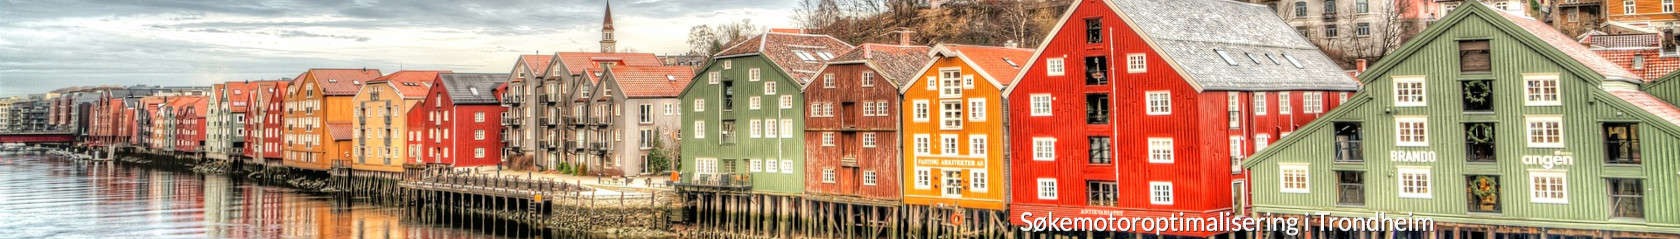 Søkemotoroptimalisering Trondheim